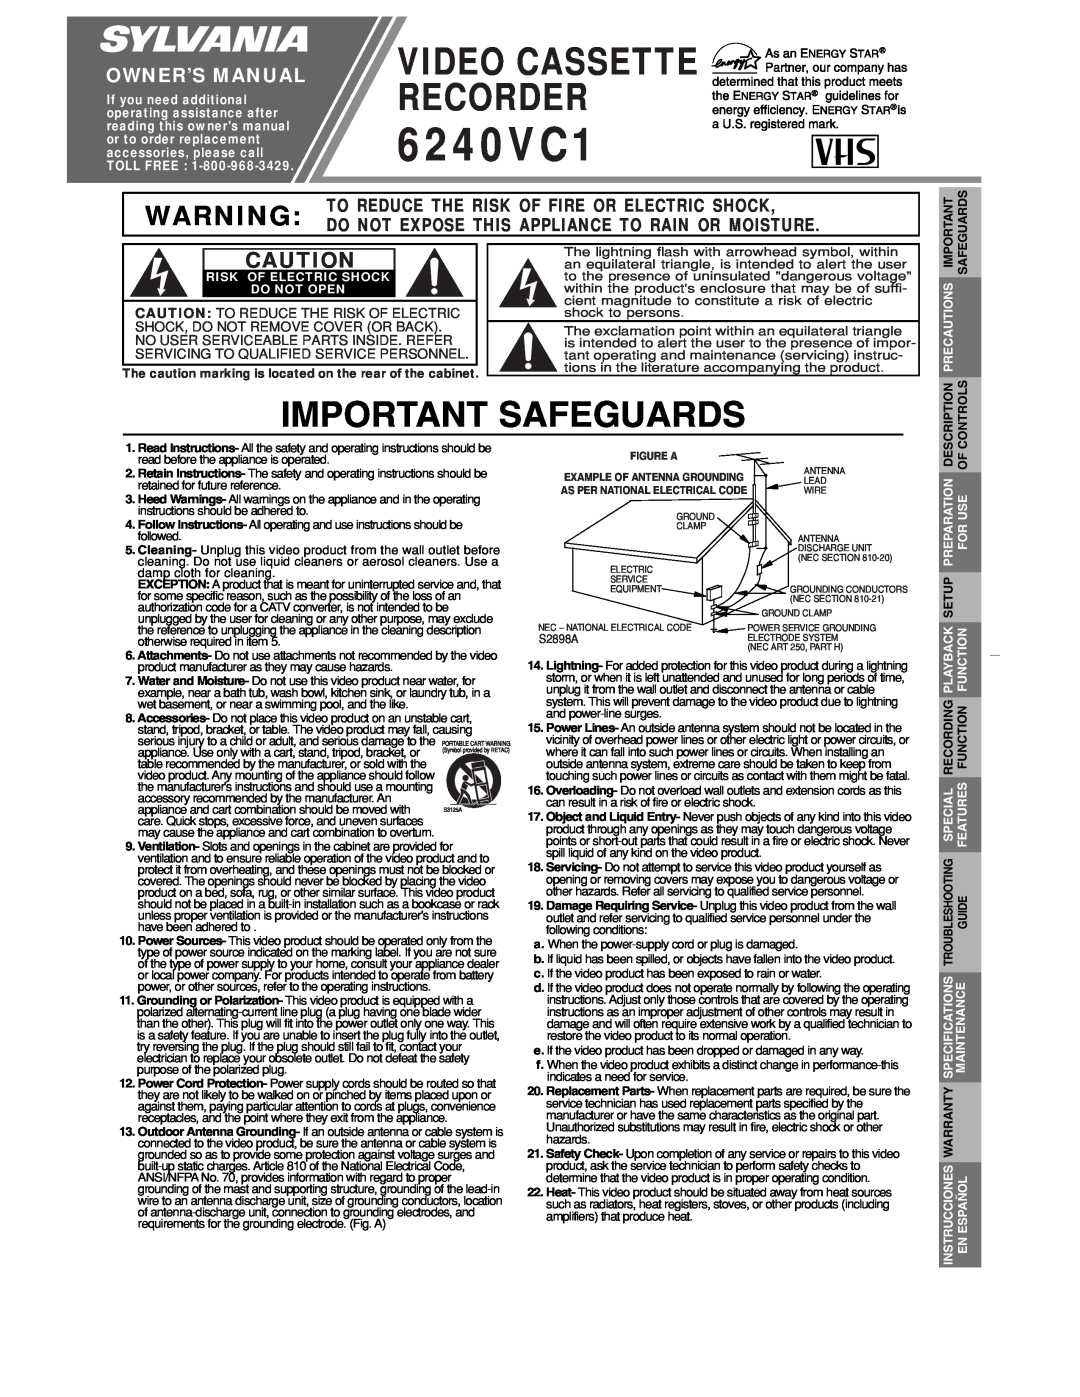 Sylvania 6240VC1 owner manual Important Safeguards, Video Cassette Recorder, Owner’S Manual, Description, Controls 